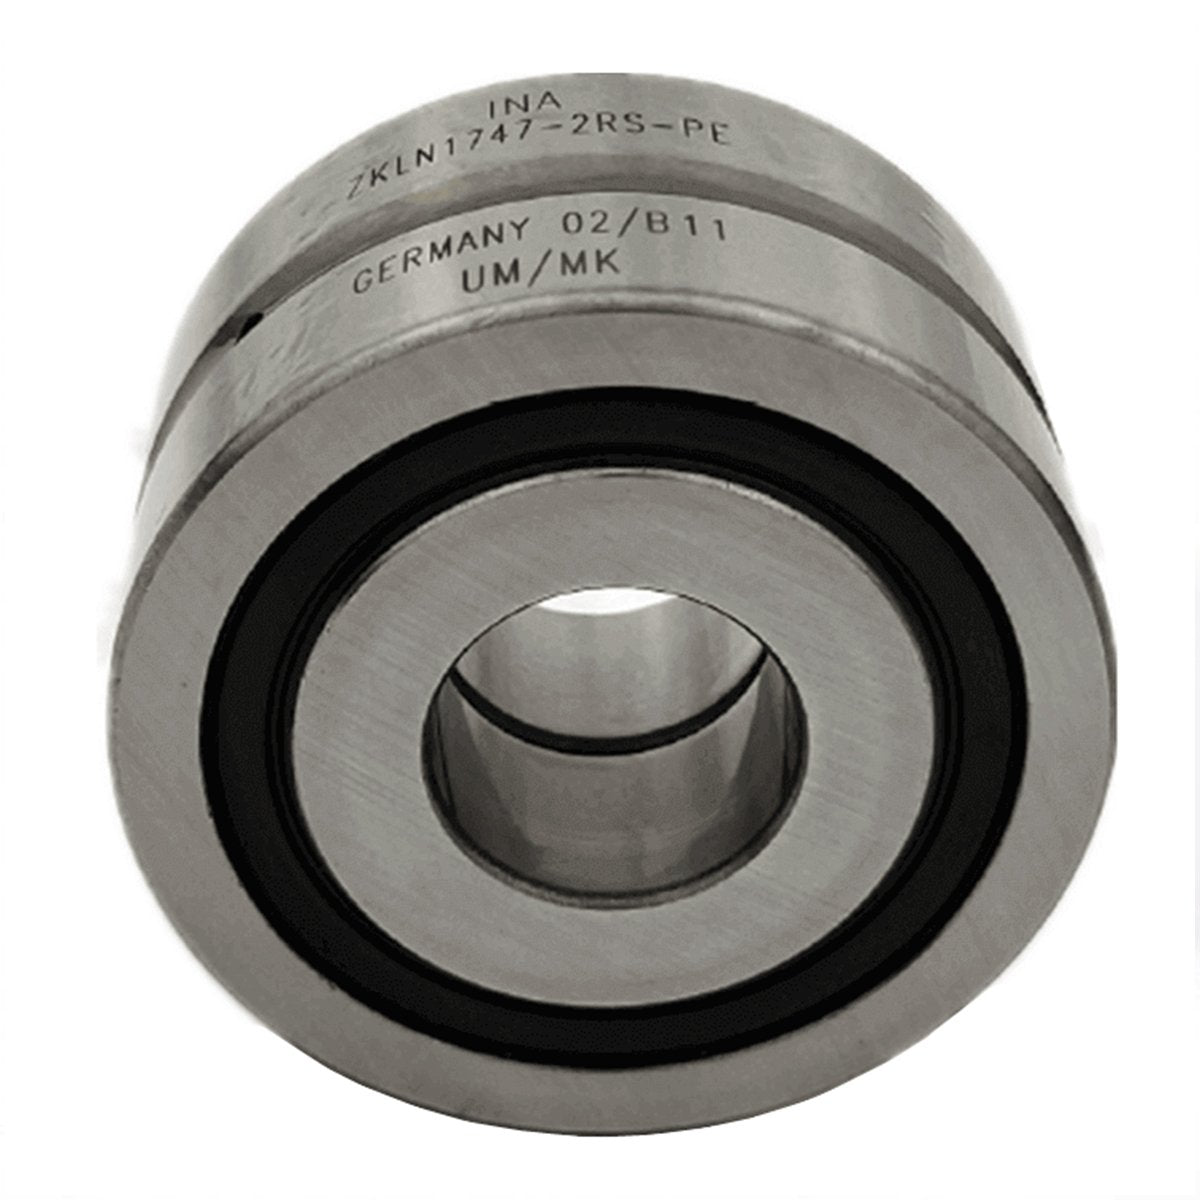 ZKLN1545-2RS INA Angular contact thrust ball bearing 15x45x25 INA